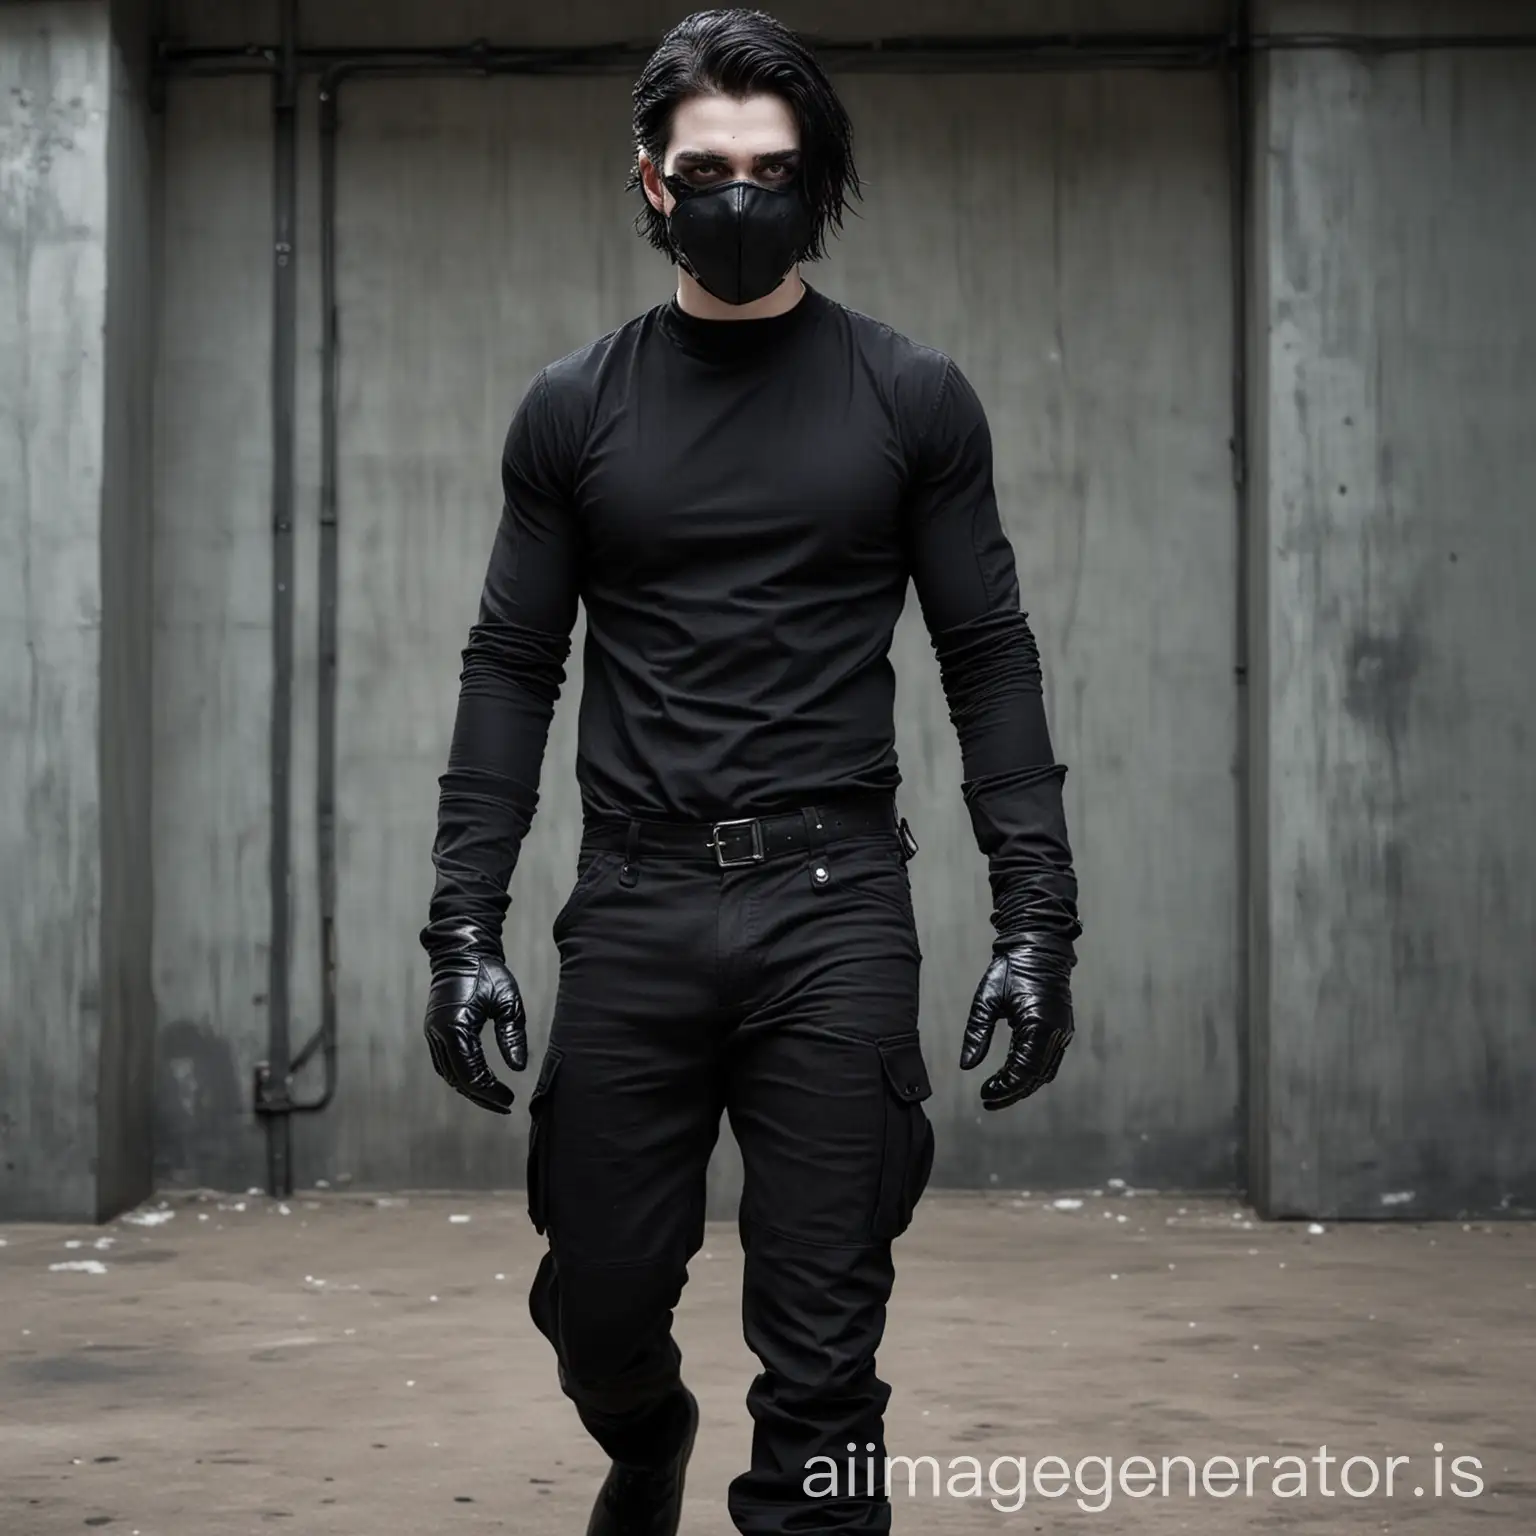 Guy with white skin, dark hair, black cargo pants, black blouse, black gloves, metallic mask